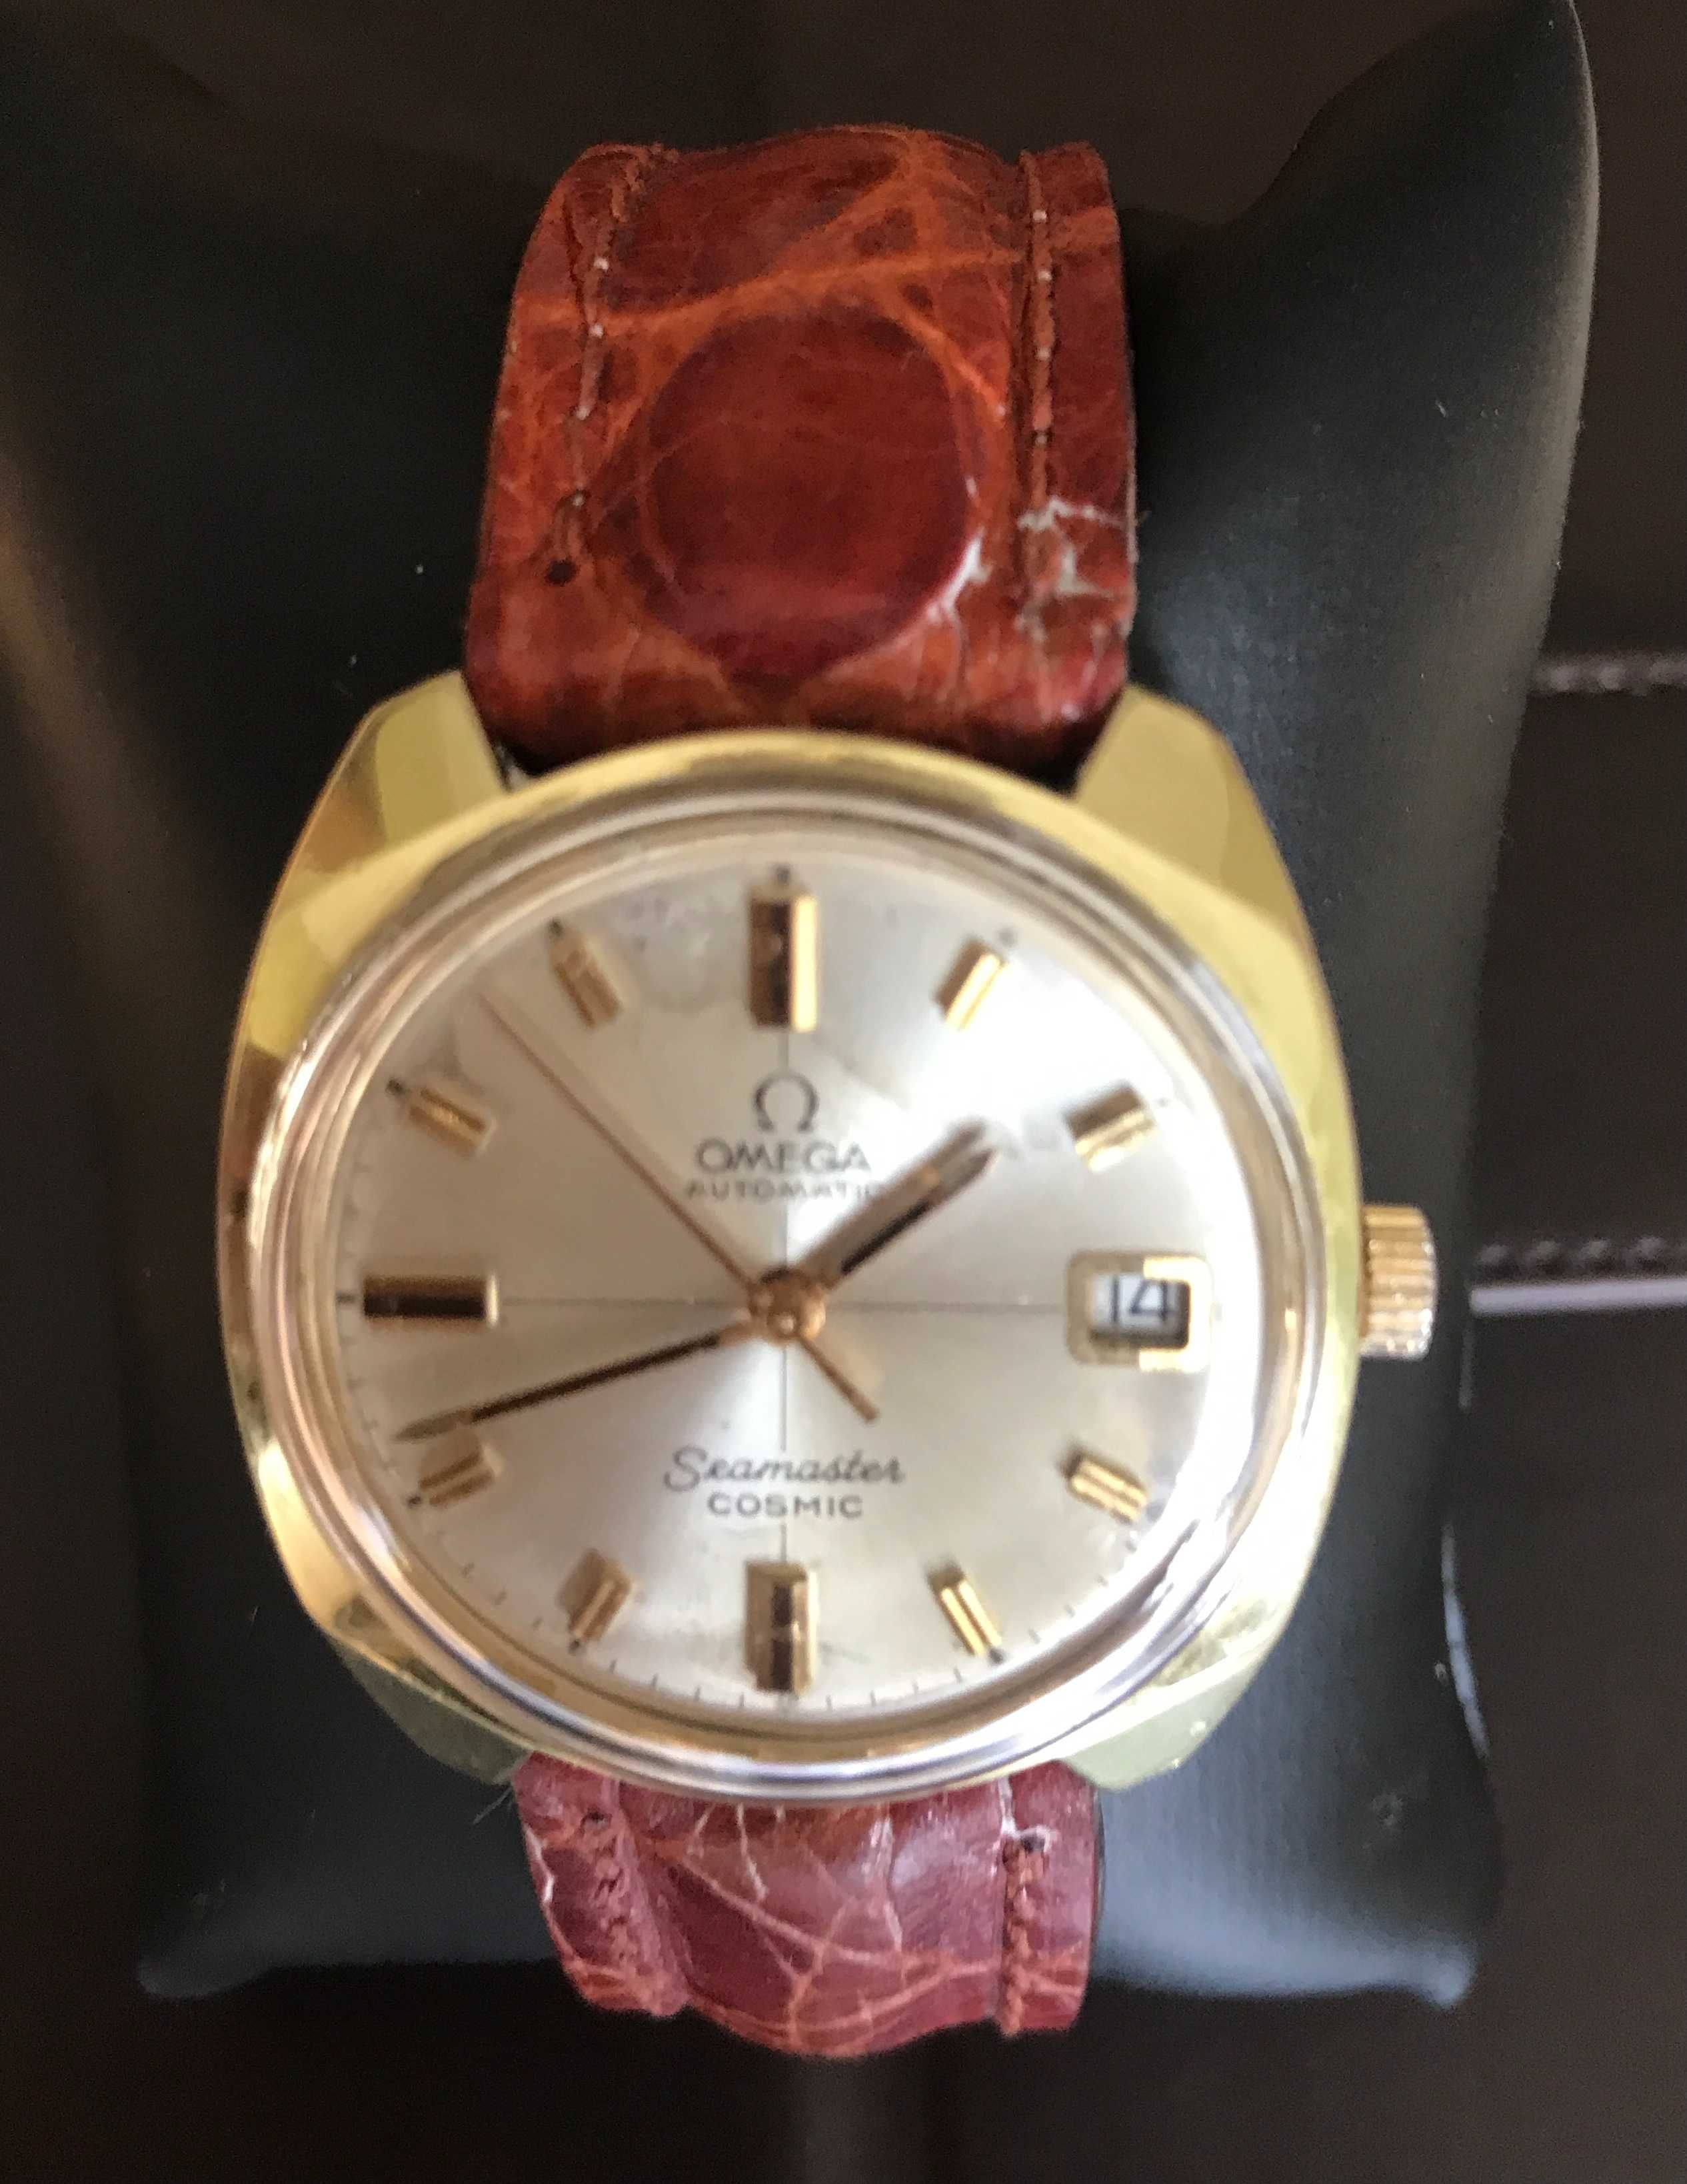 Omega Seamaster Cosmic złoty zegarek męski lata 60-te automat